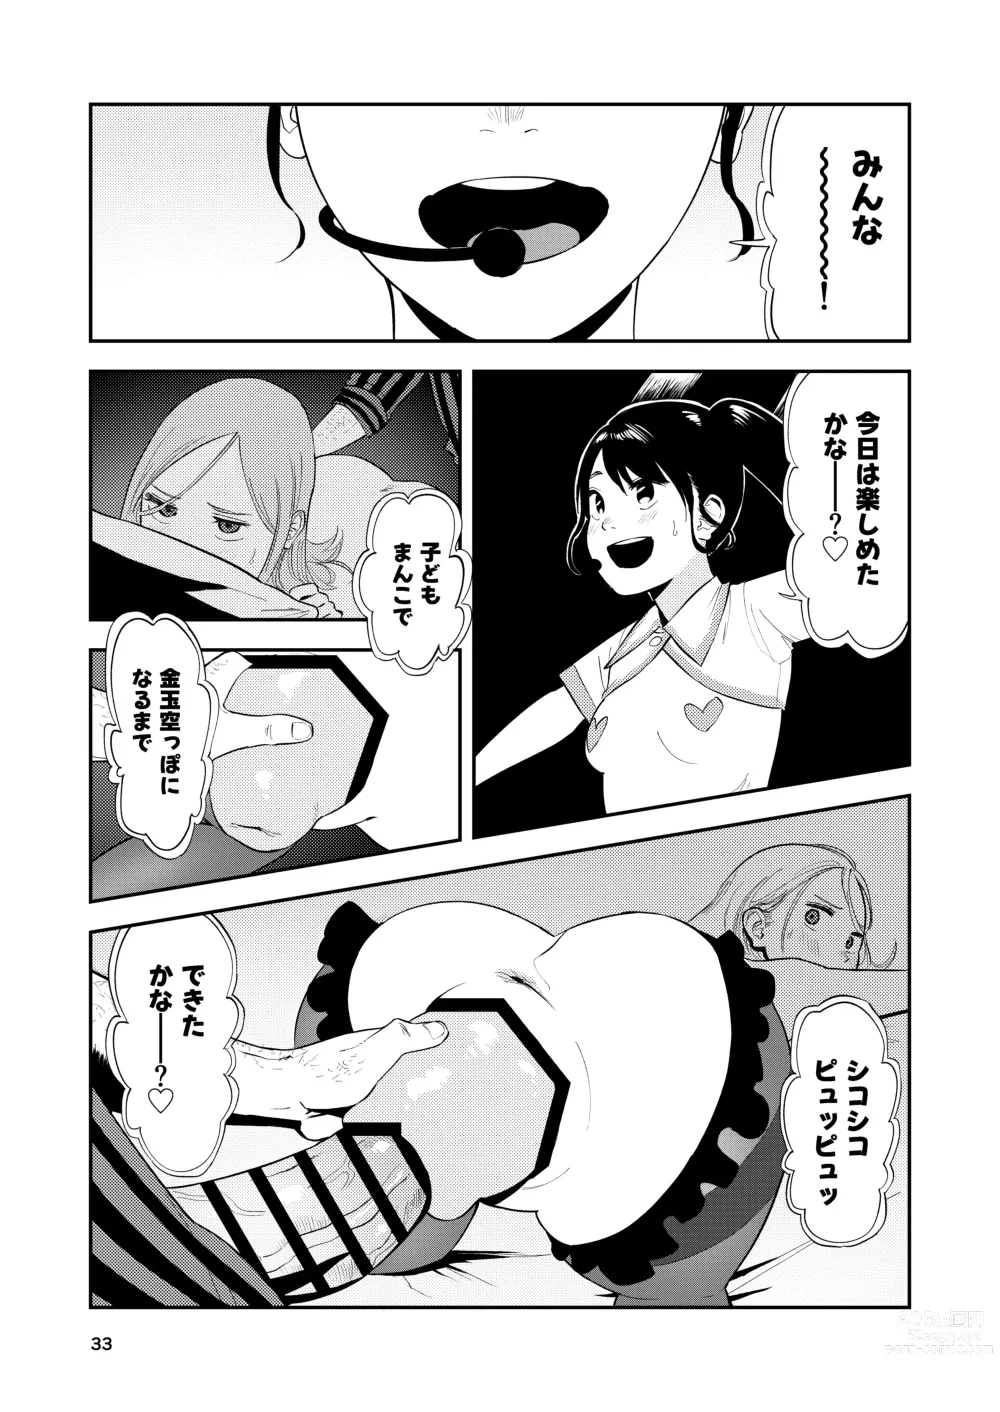 Page 33 of doujinshi LOLITA COMPLEX